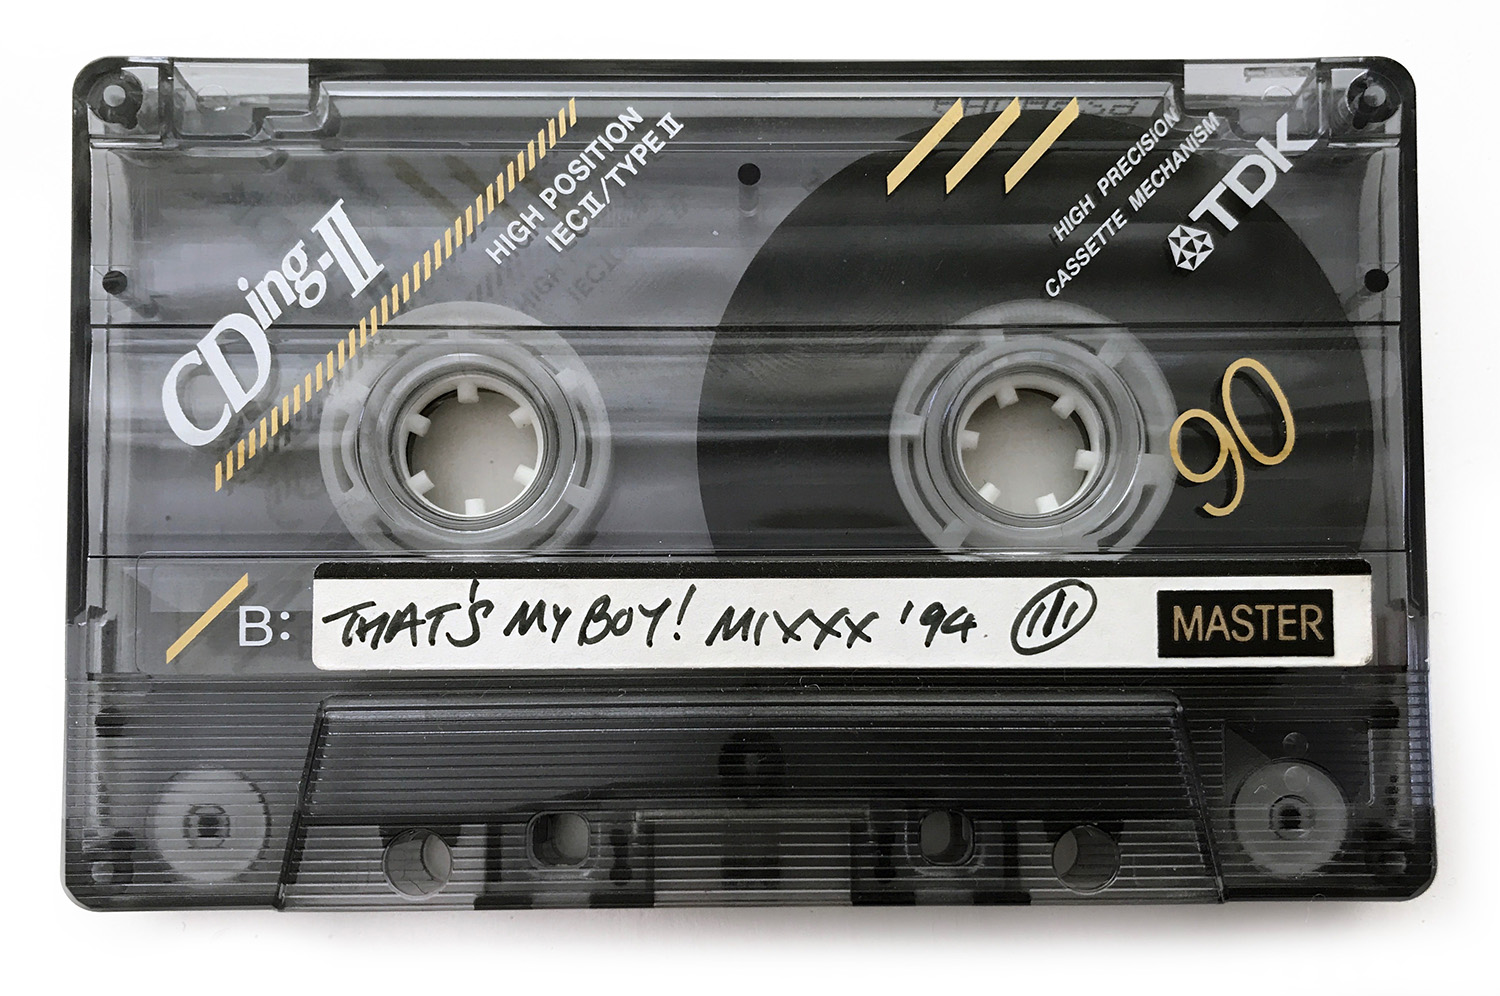 MS100 tape B